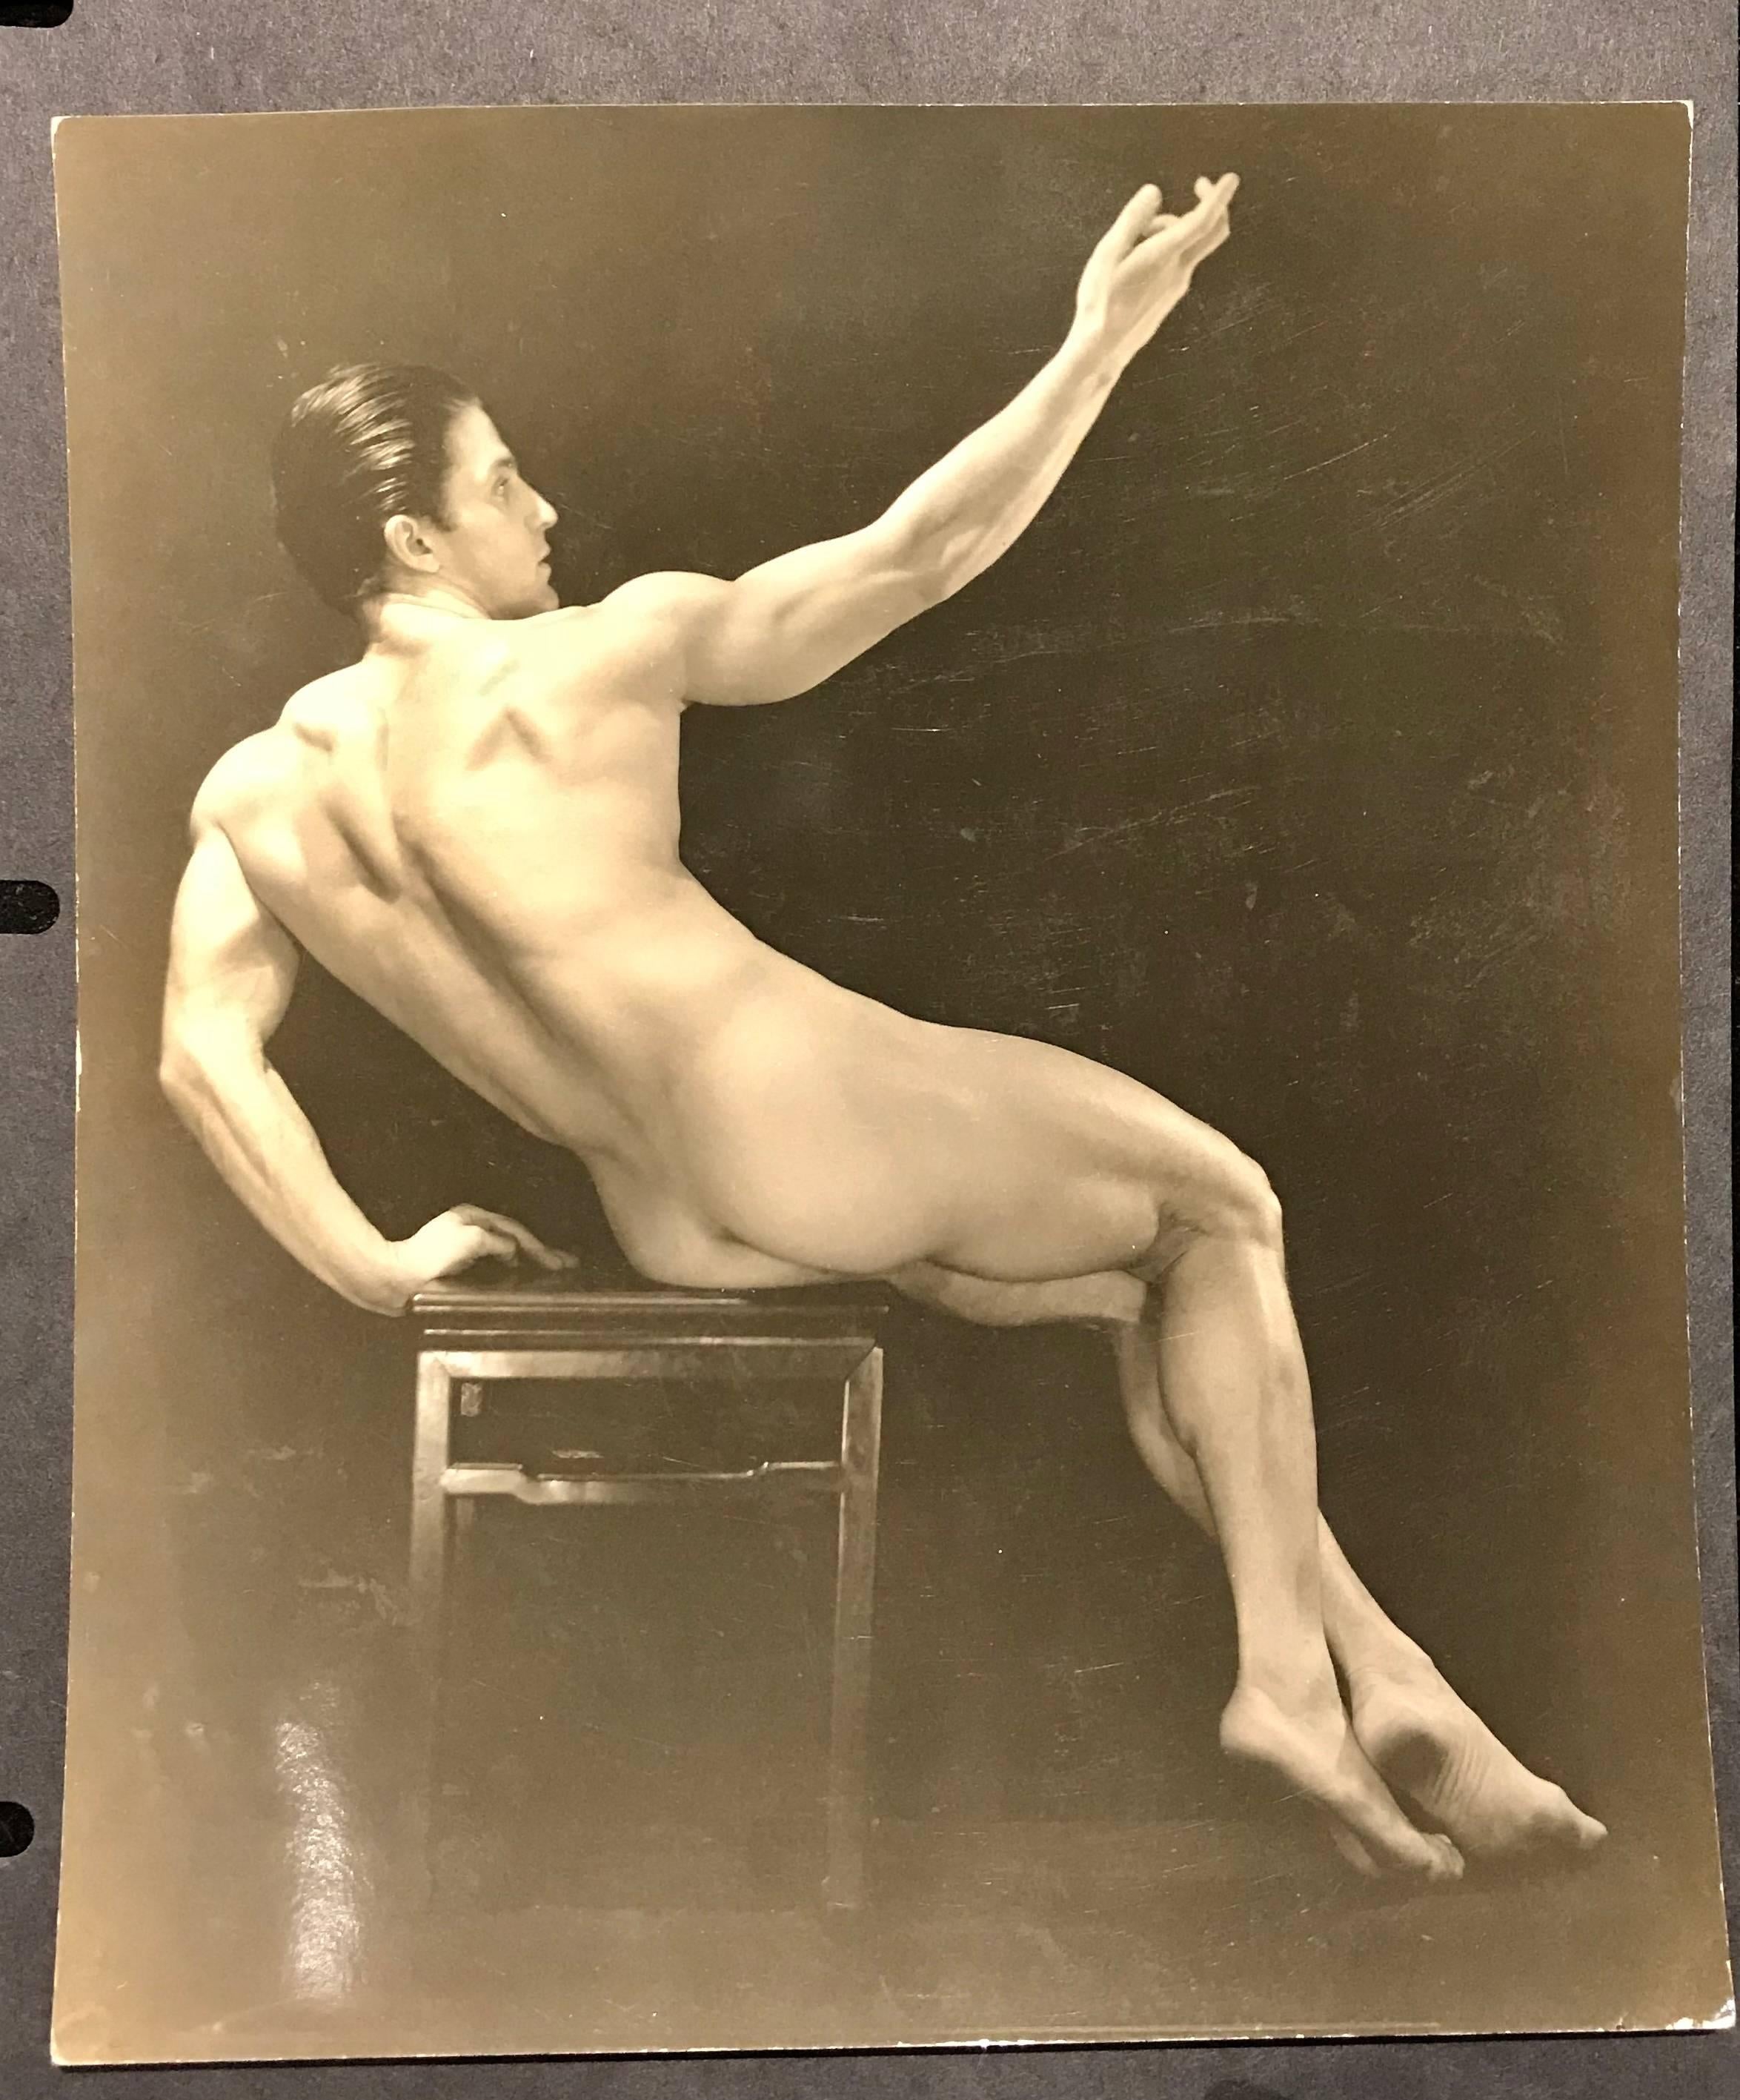 An Original Edwin Townsend Silver Print of Male Nude, circa 1920. 